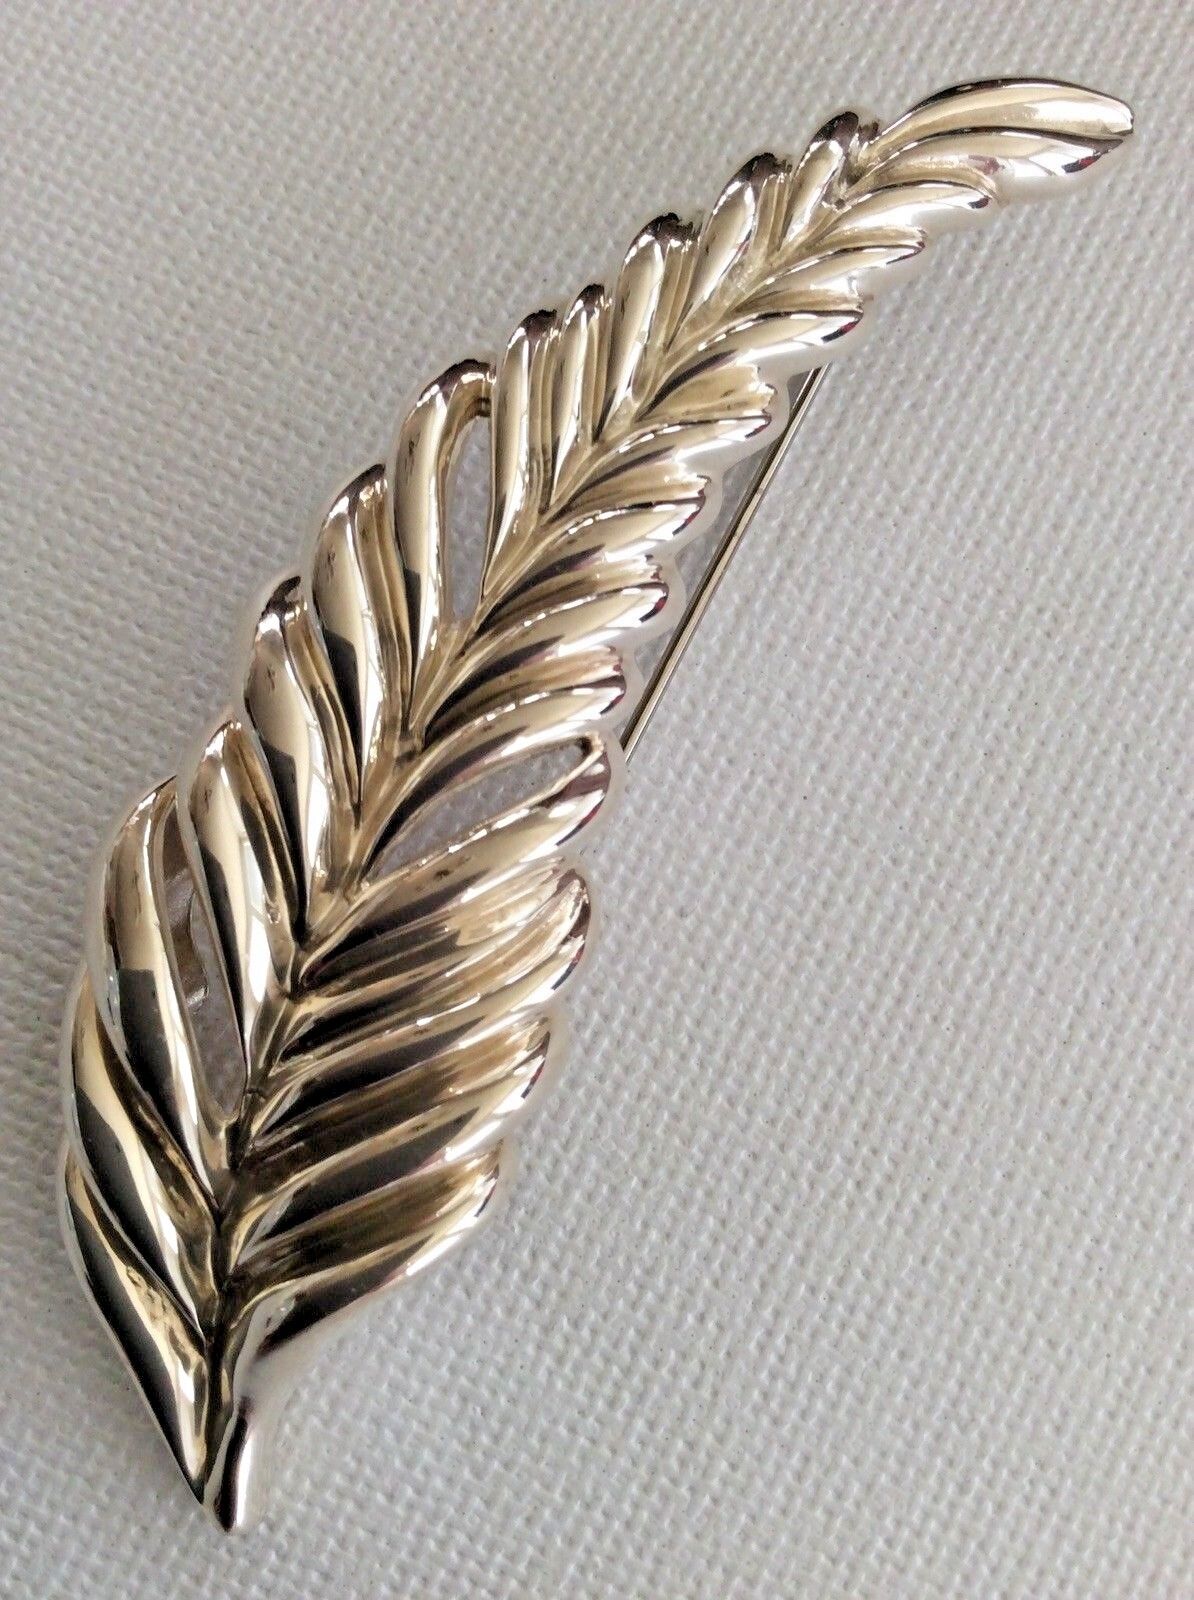 Rare Vintage TIFFANY & CO. Fern Leaf Feather Pin Brooch Sterling Silver 925